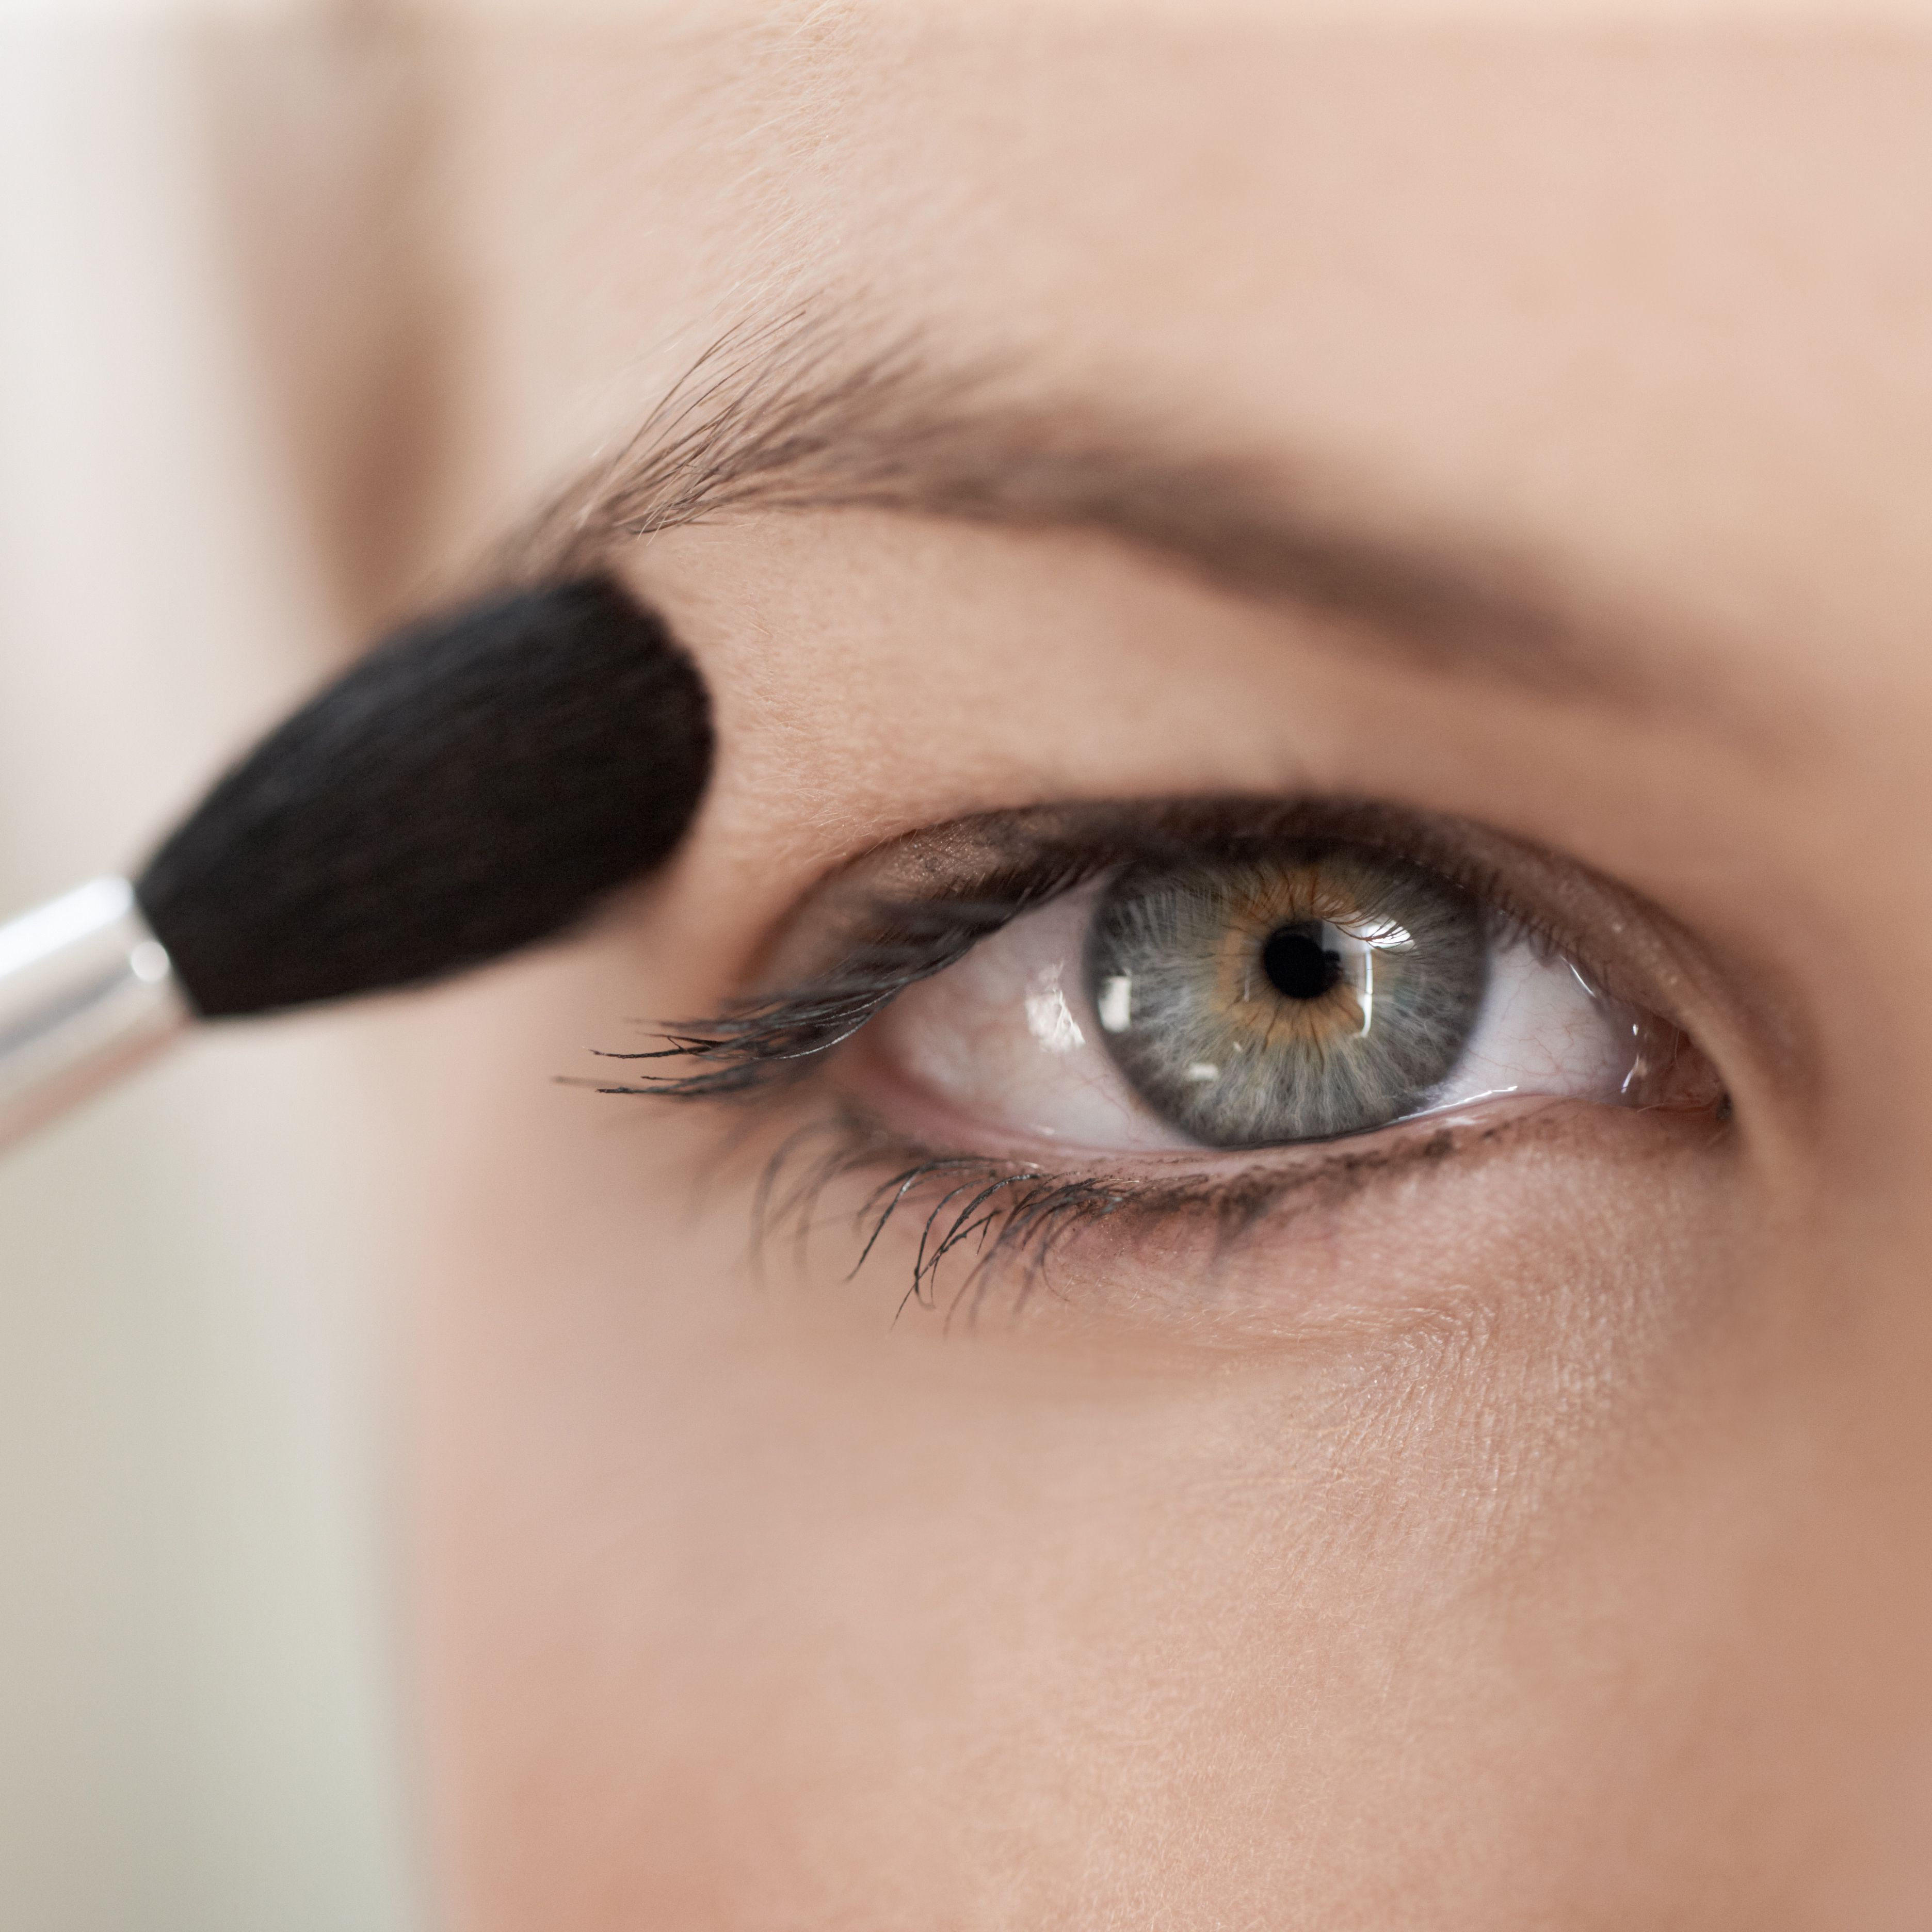 Makeup For Hooded Eyes Makeup Tricks For Hooded Eyes Hooded Eyes Makeup Tips And Tricks